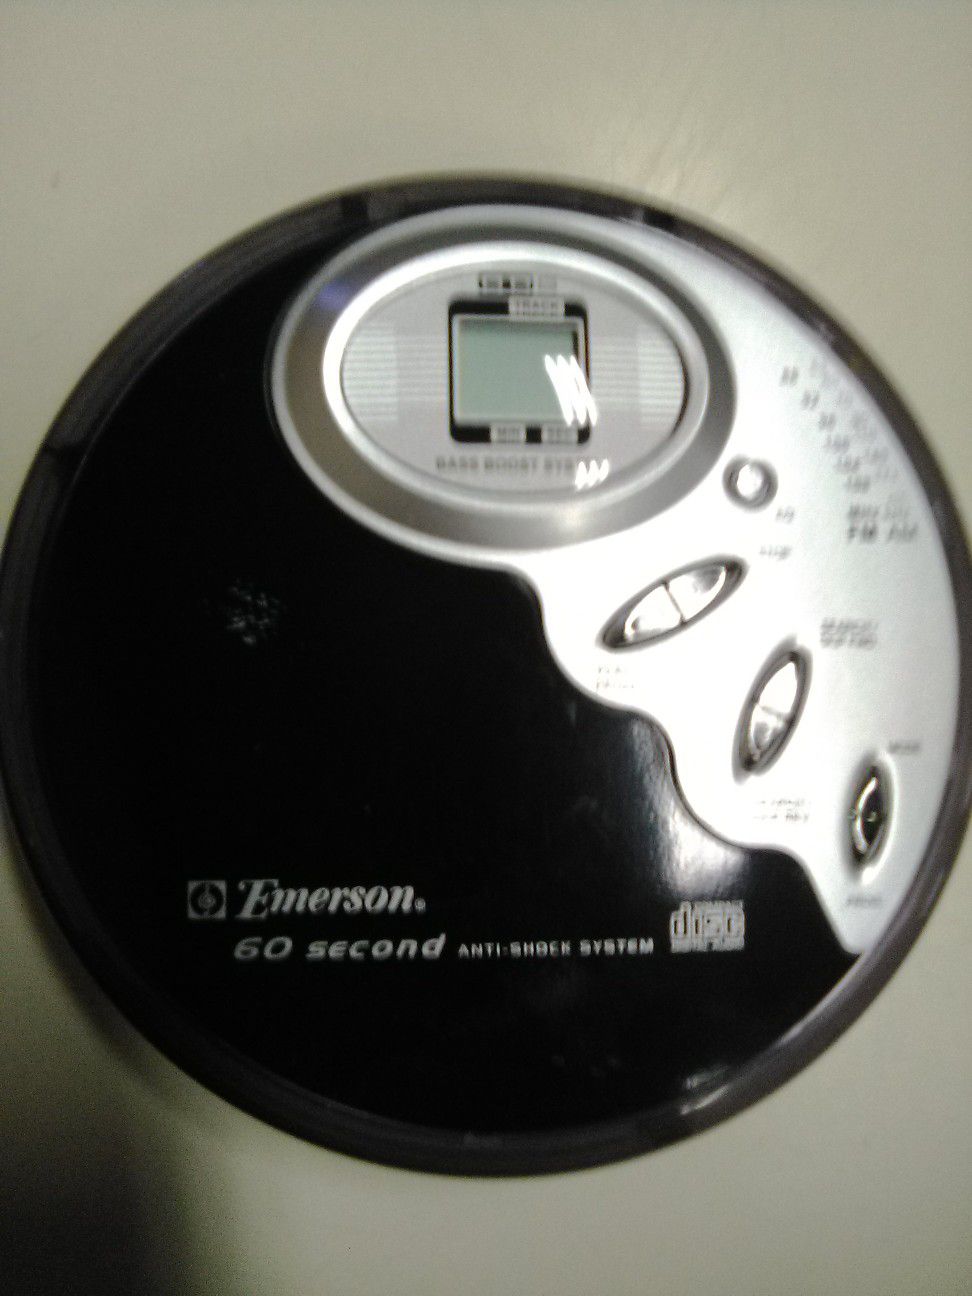 Emerson CD portable player